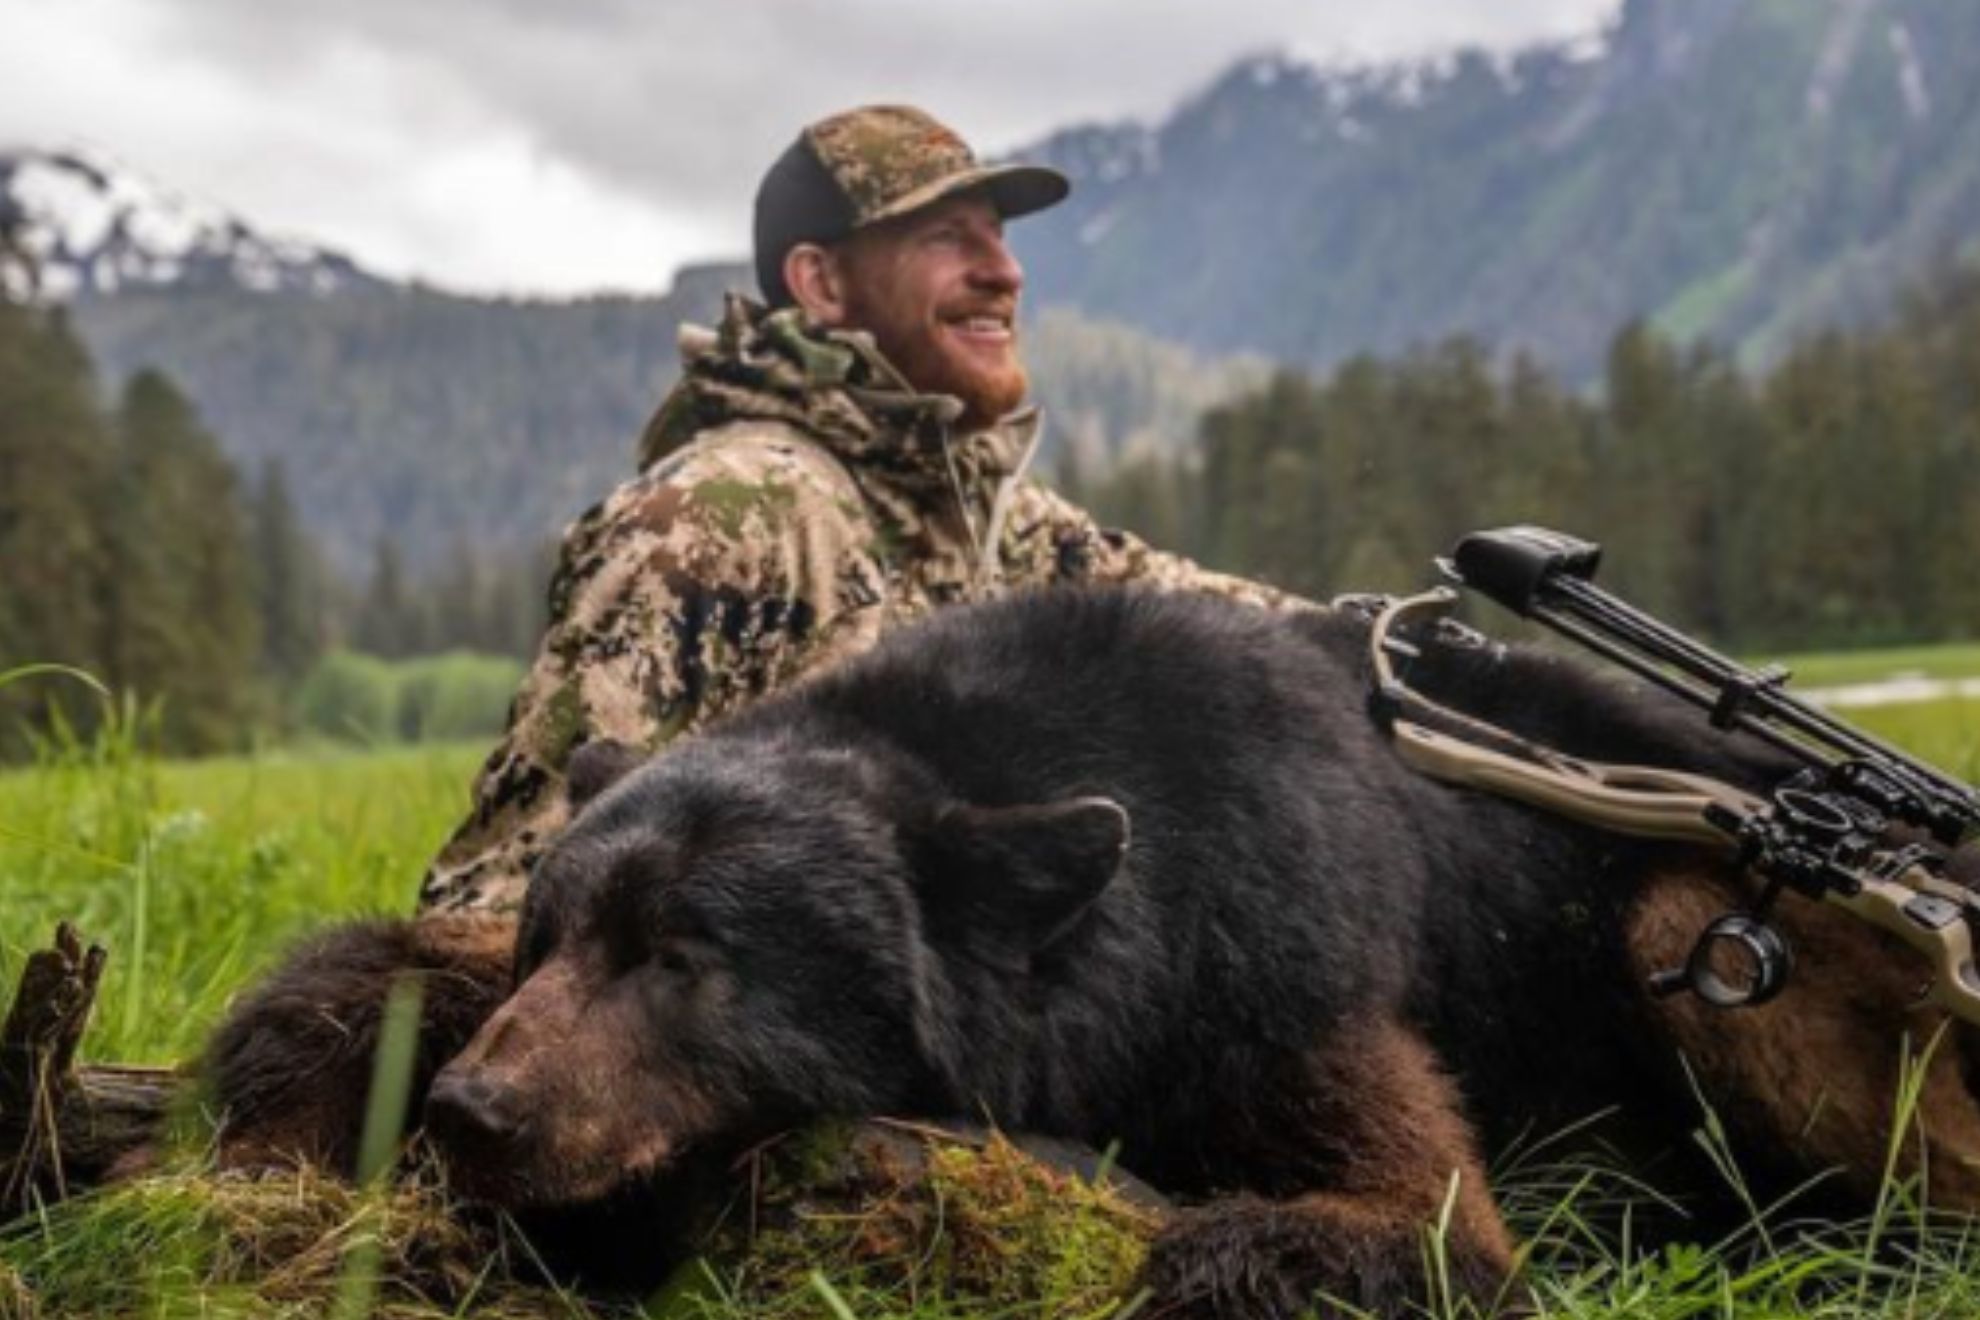 Carson Wentz executes bear with bow and arrow, calls it an incredible animal